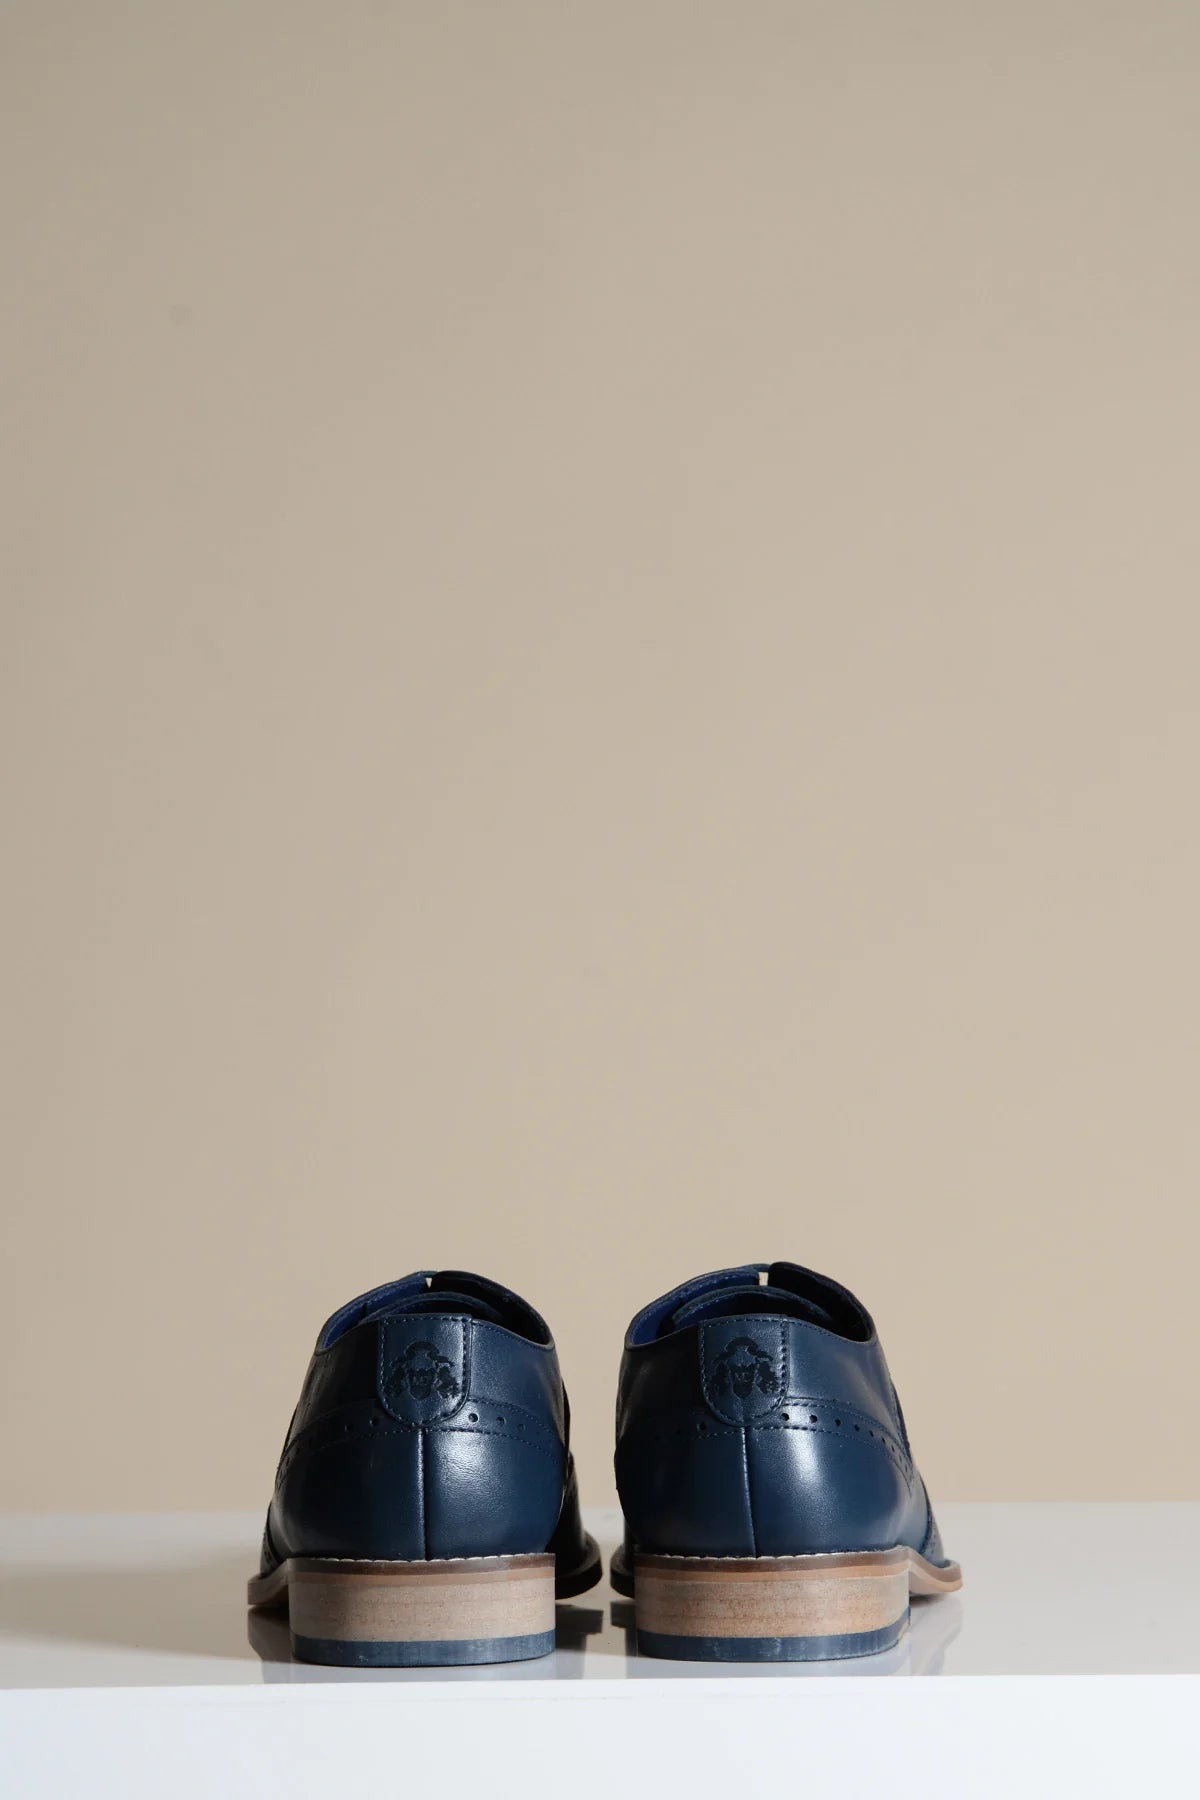 Chaussures en cuir bleu marine Marc Darcy Dawson - Wingtip